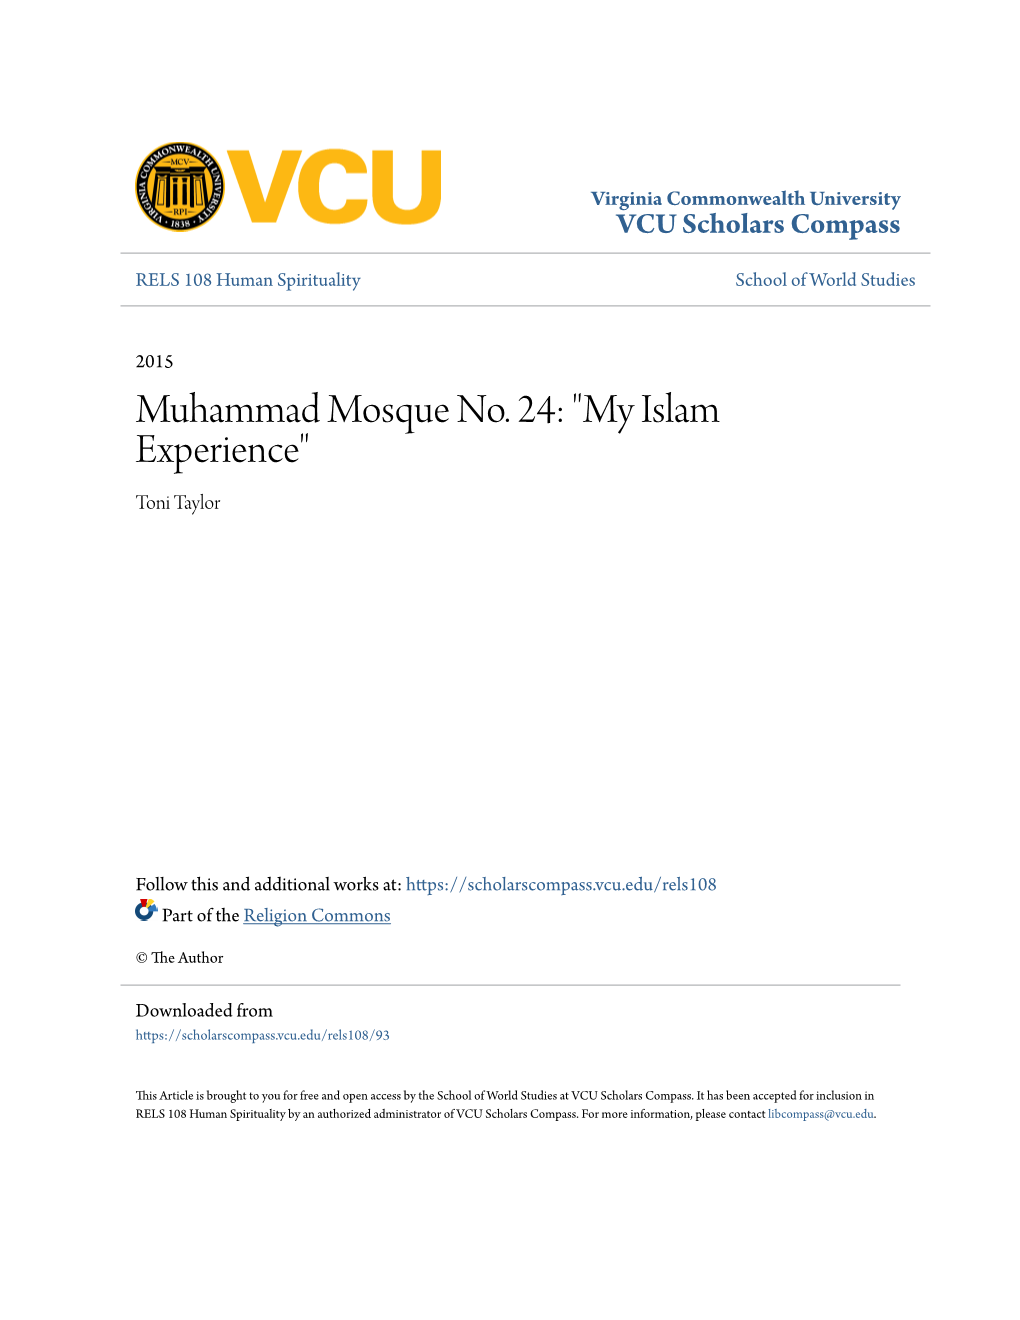 Muhammad Mosque No. 24: "My Islam Experience" Toni Taylor